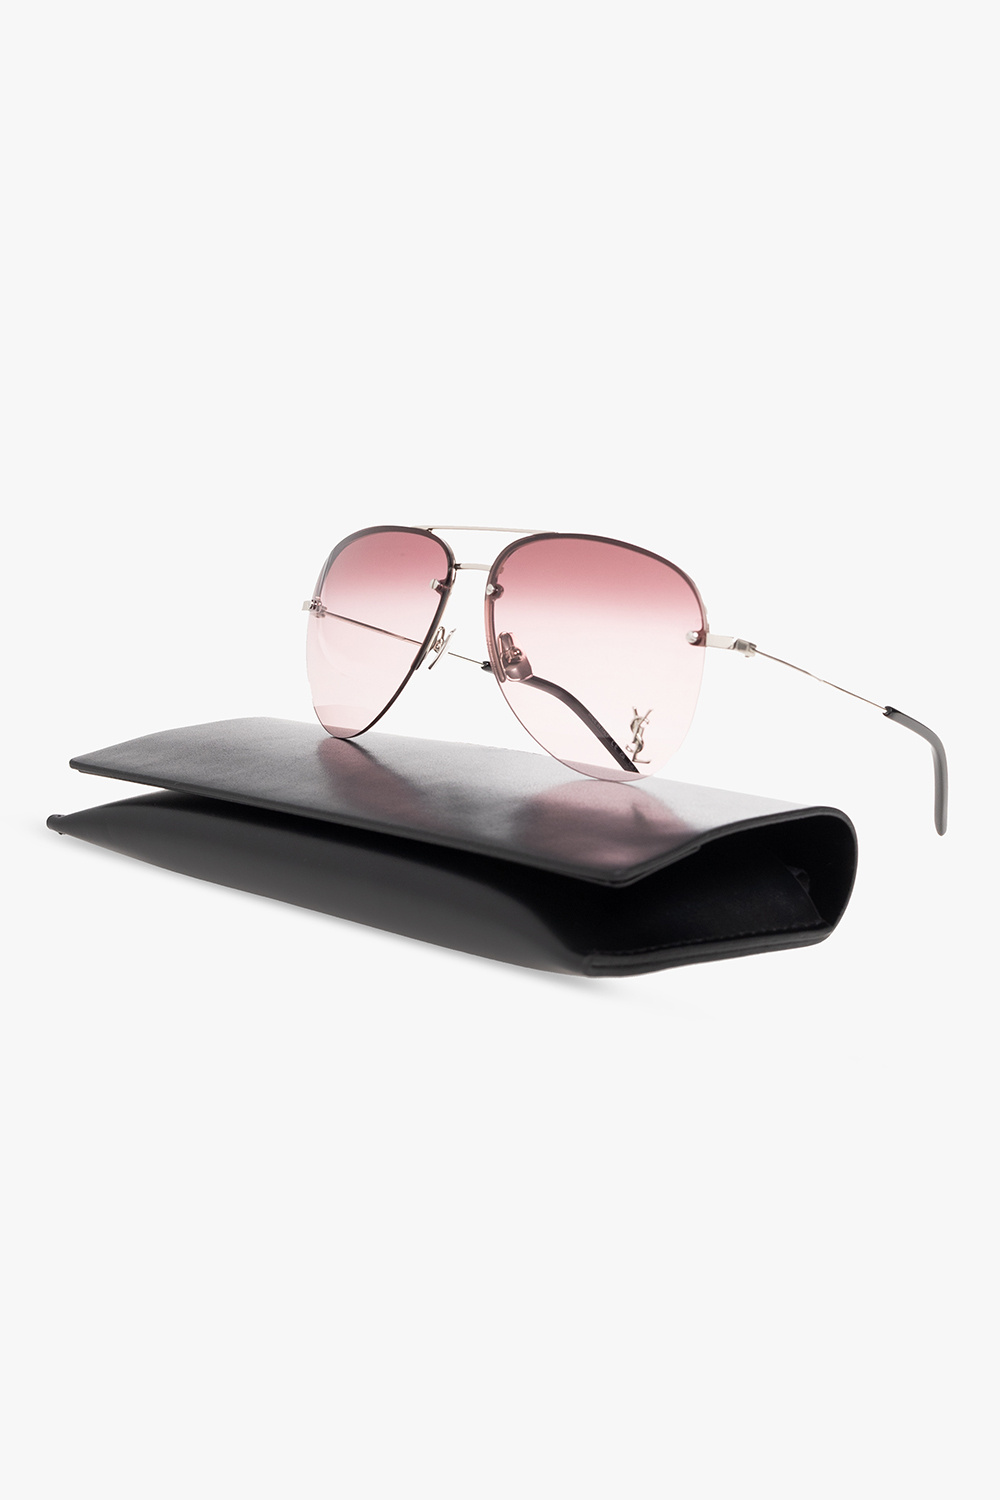 Saint Laurent ‘CLASSIC 11 M’ RALPH sunglasses